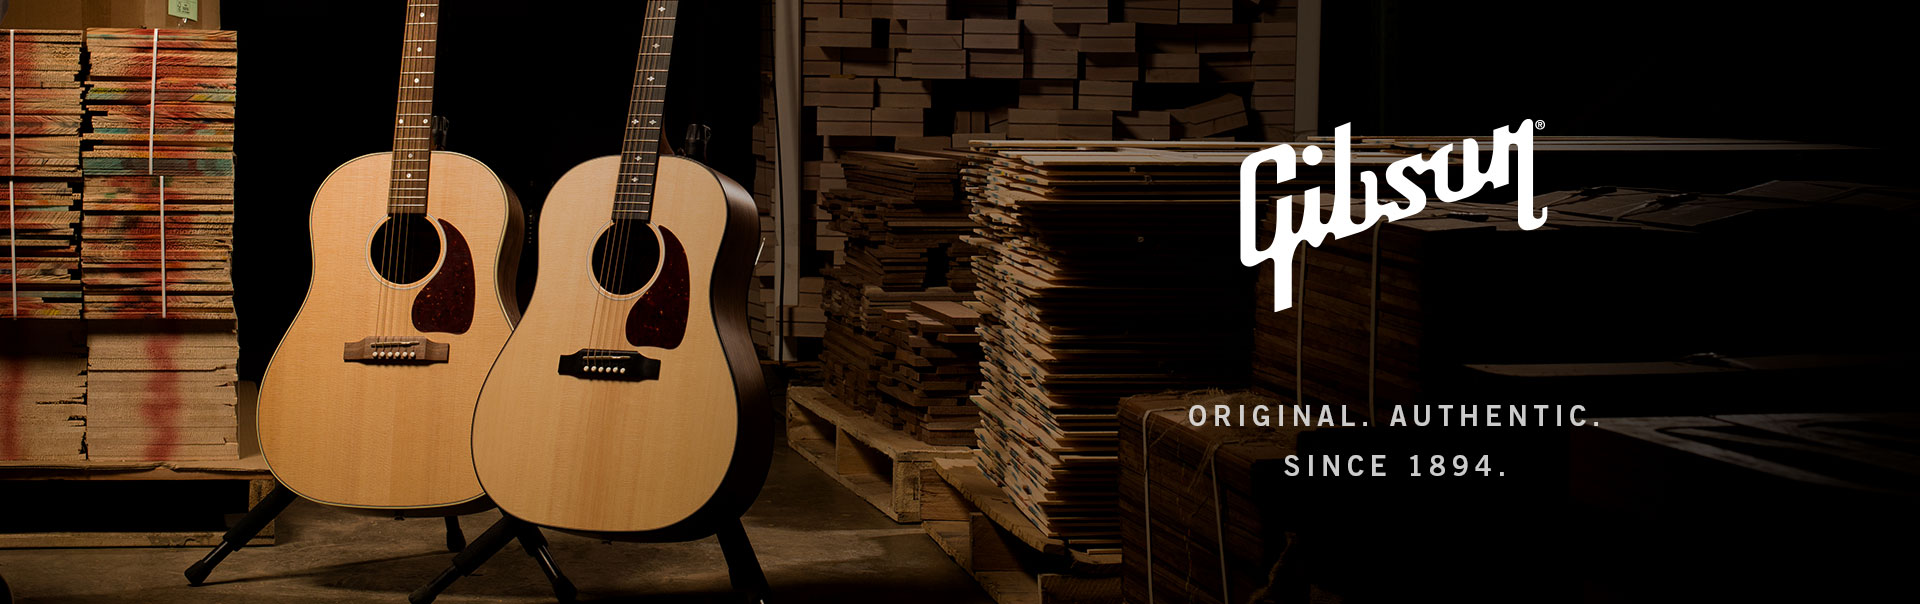 Gibson akustik gitarren - Die TOP Auswahl unter den Gibson akustik gitarren!